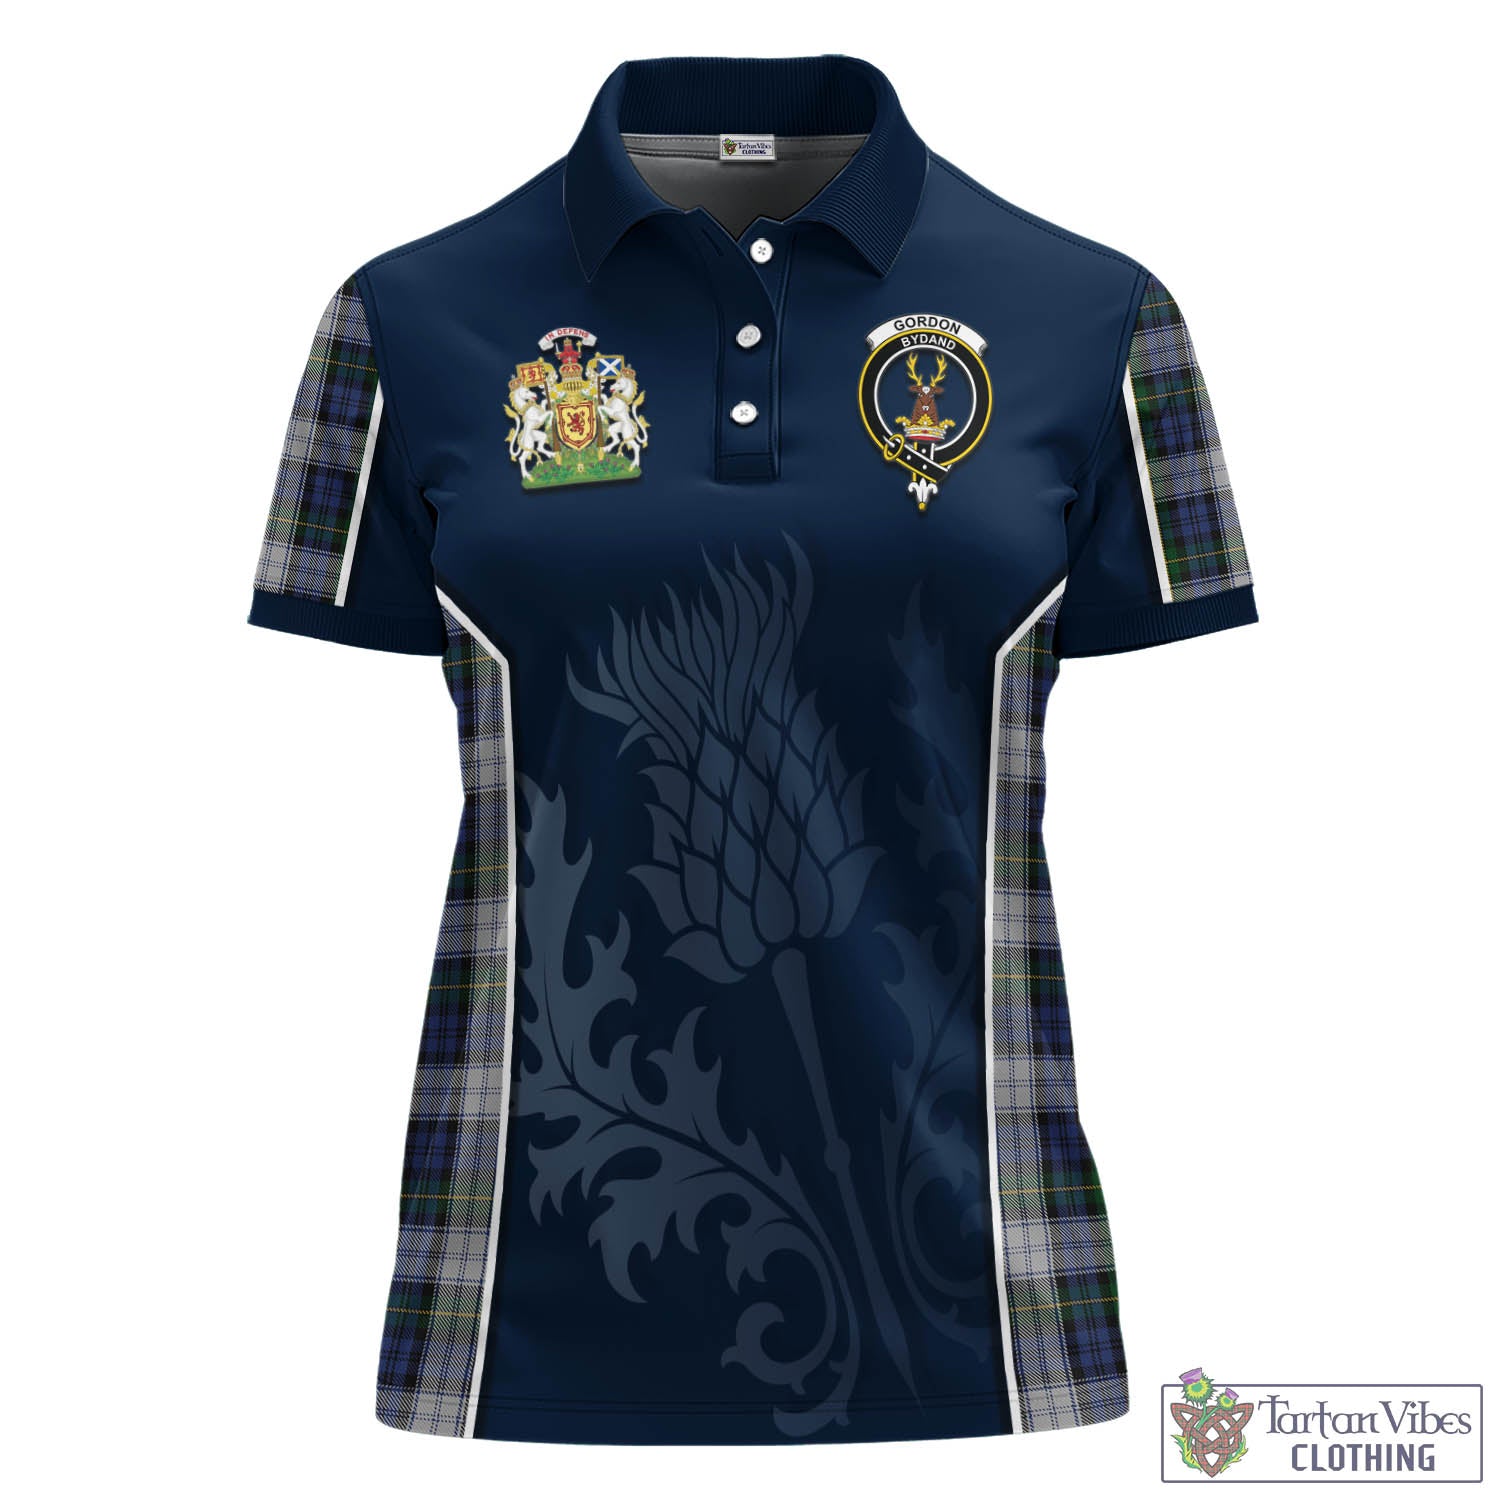 Tartan Vibes Clothing Gordon Dress Tartan Women's Polo Shirt with Family Crest and Scottish Thistle Vibes Sport Style